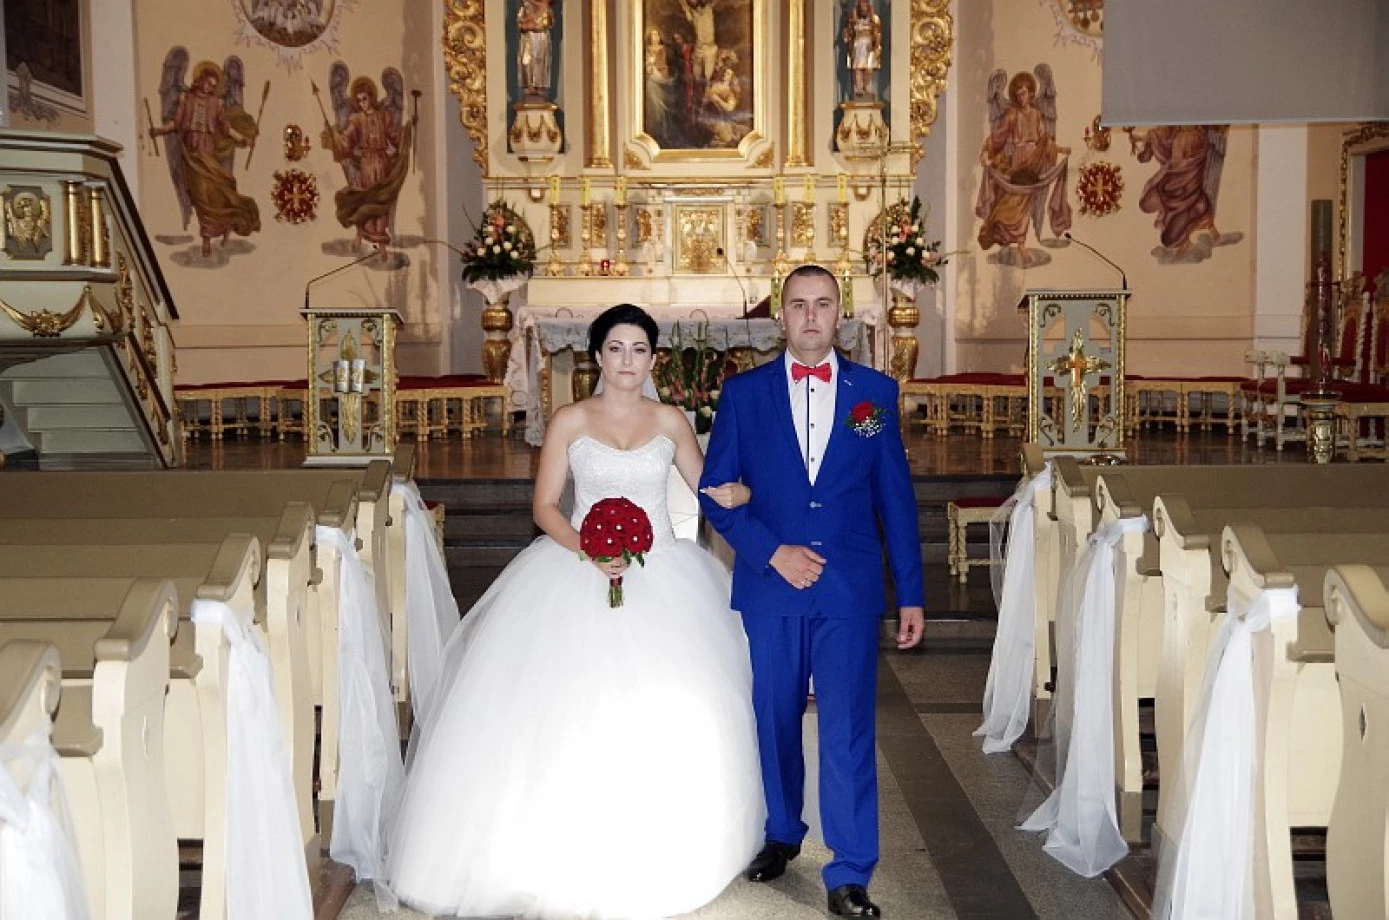 zdjęcia  fotograf robert-kaliszuk portfolio zdjecia slubne inspiracje wesele plener slubny sesja slubna